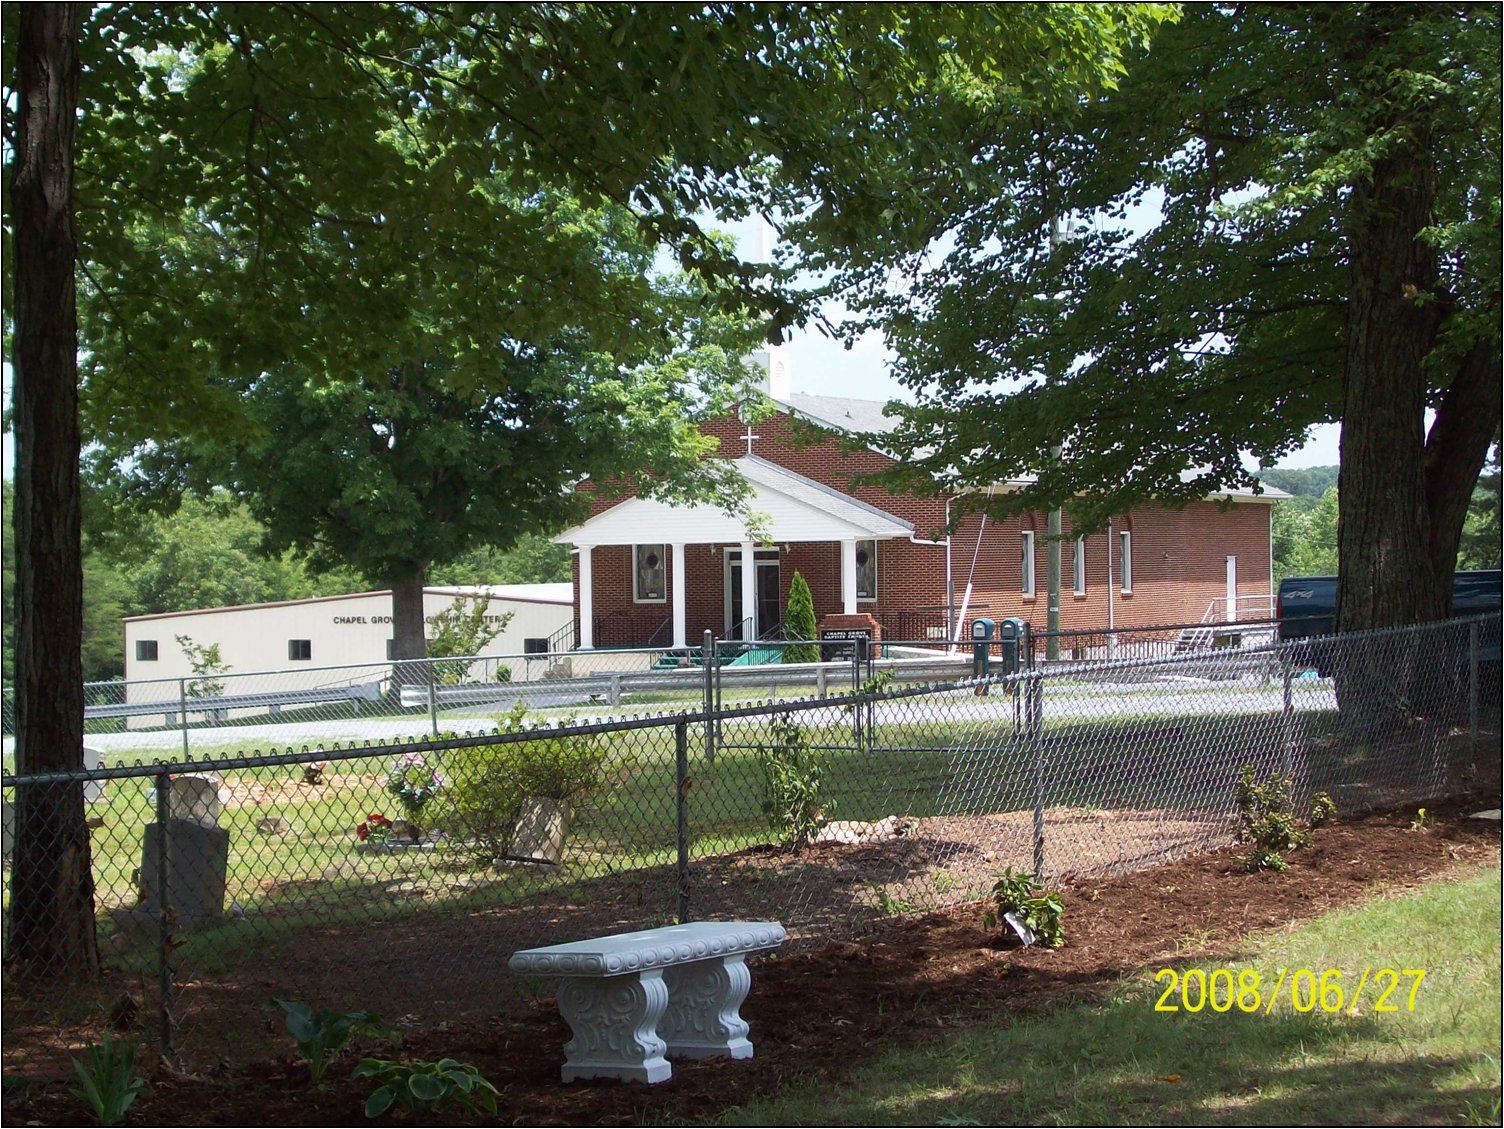 Chapel Grove Baptist